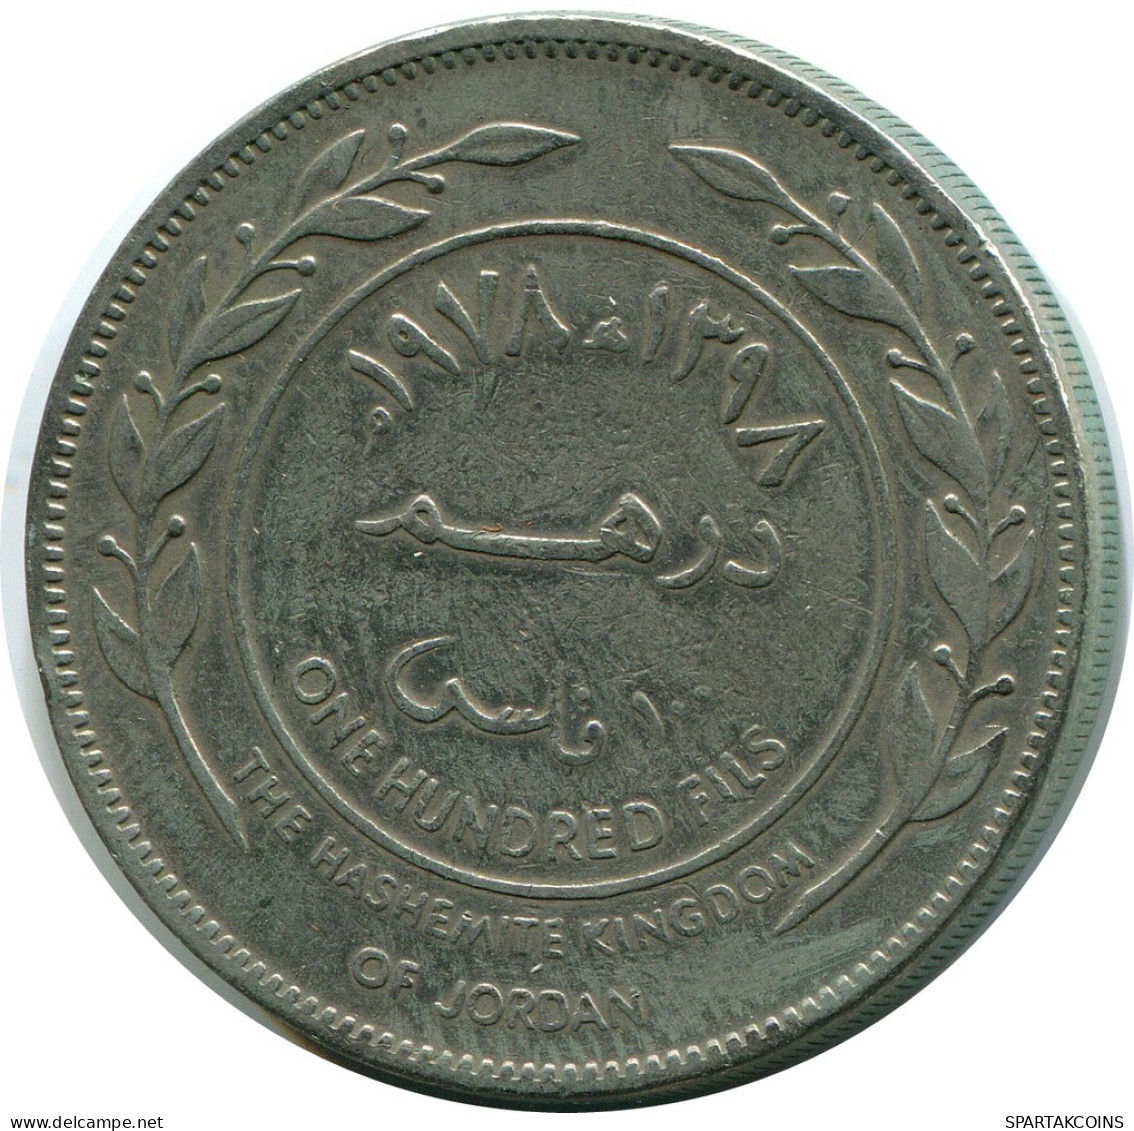 1 DIRHAM / 100 FILS 1978 JORDAN Coin #AP100.U - Jordanie